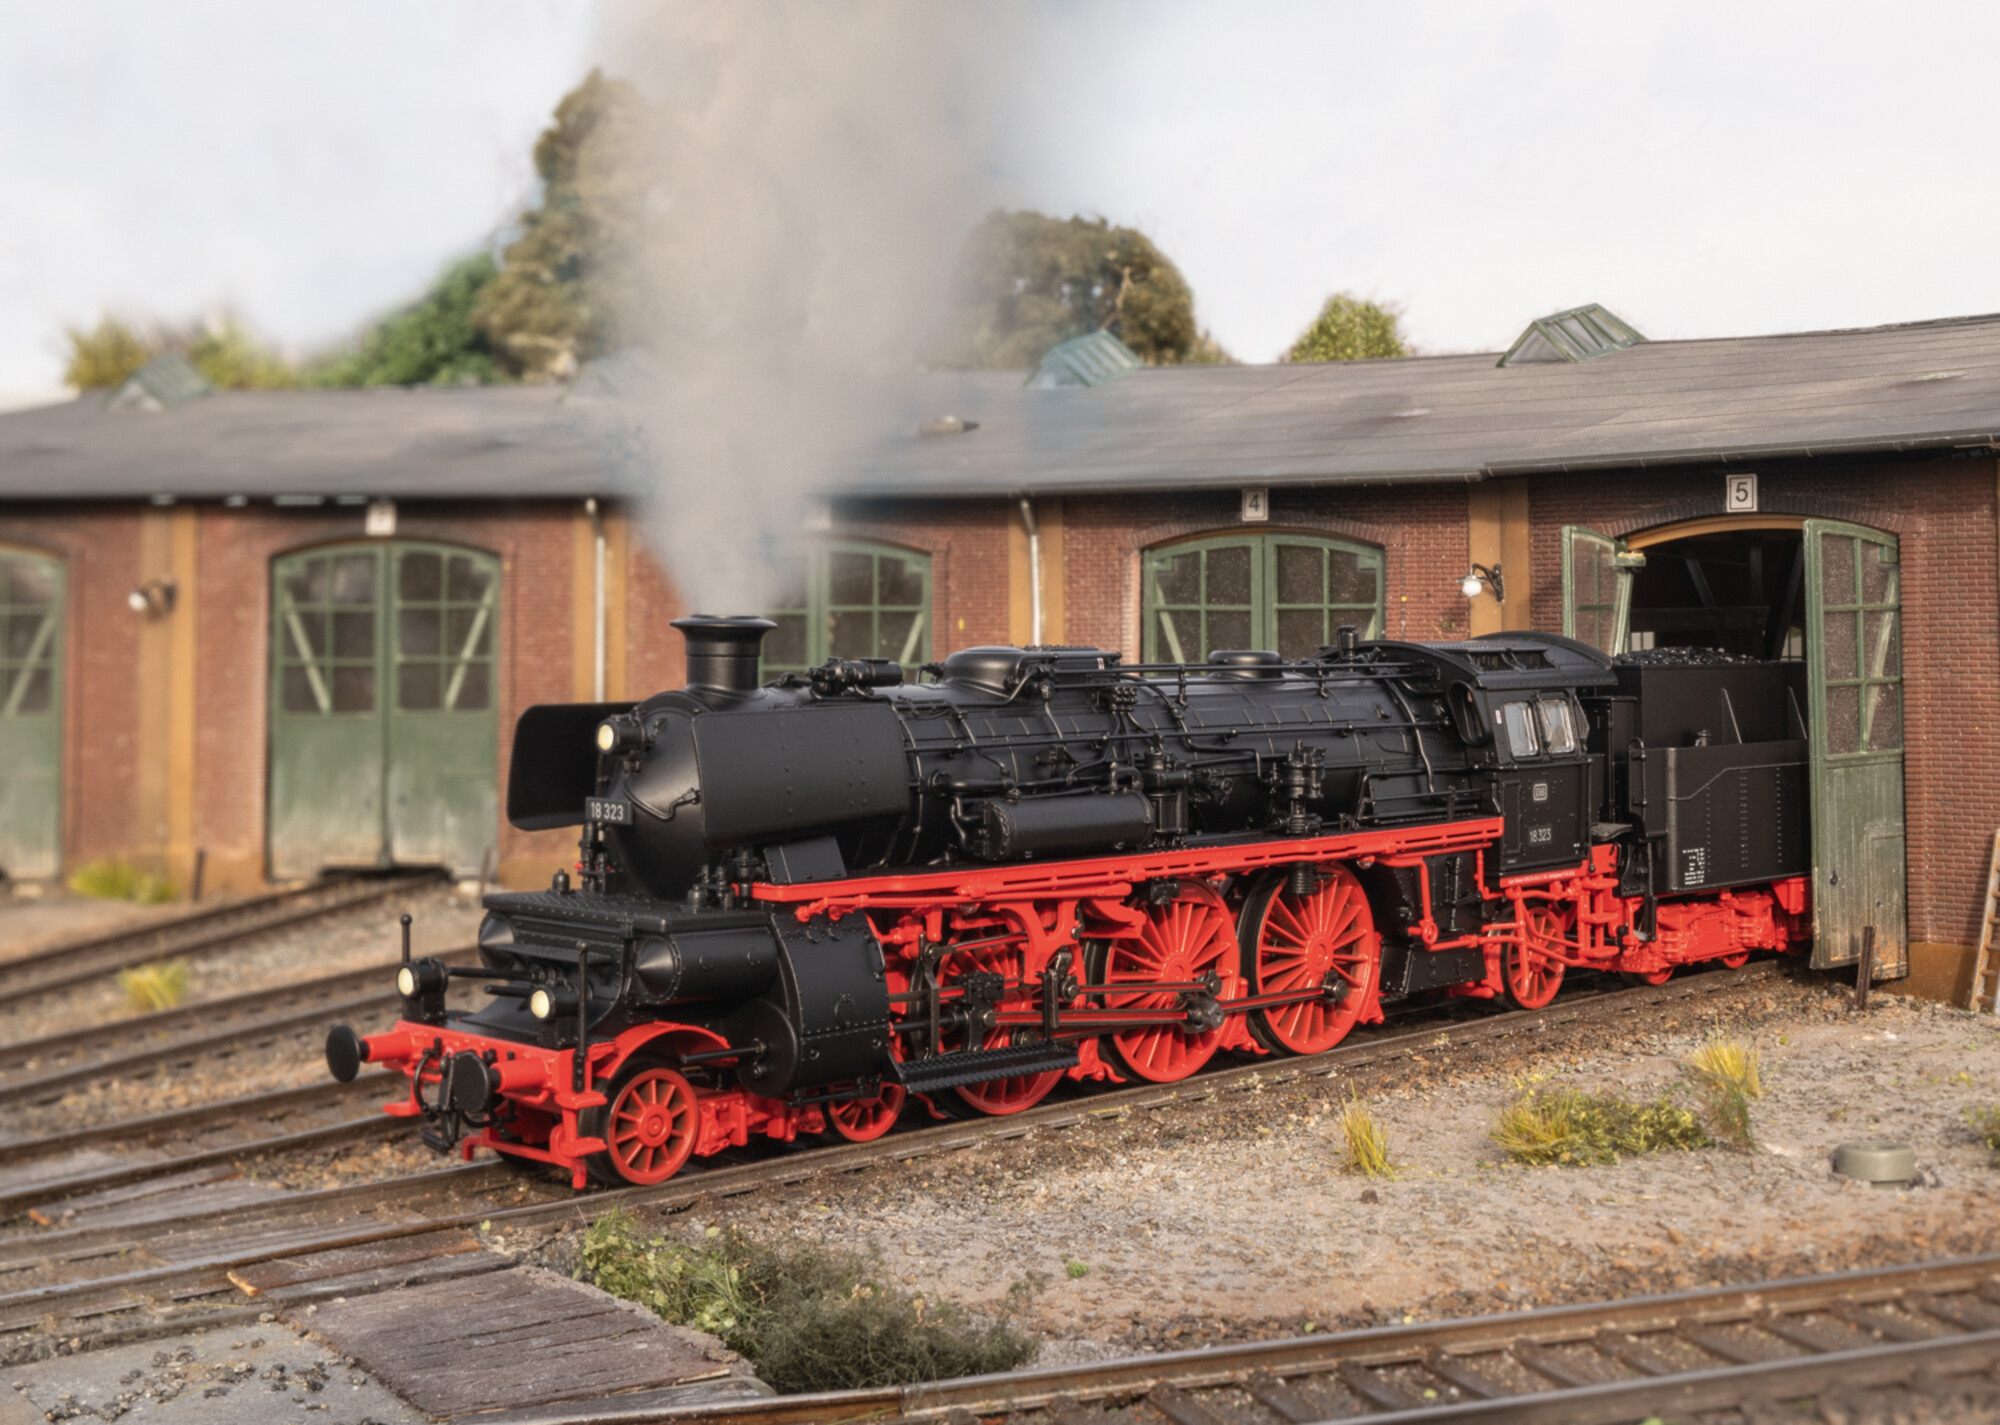 Trix 25323 Dampflokomotive 18 323